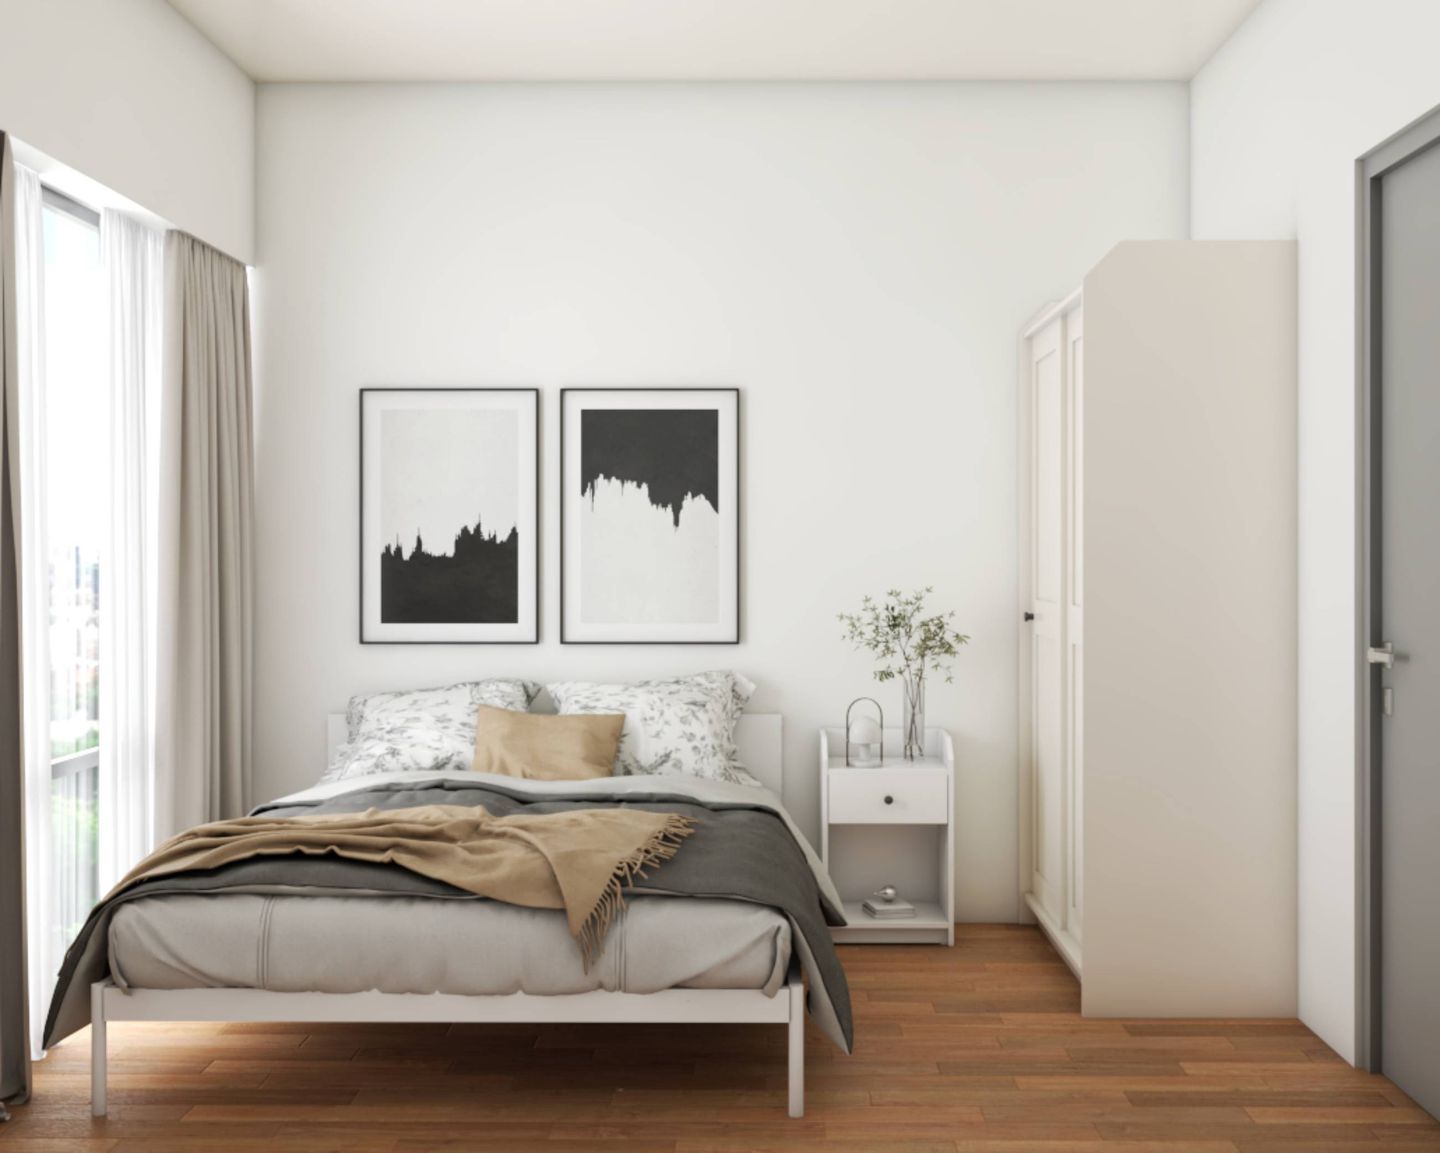 Bedroom Design With White Sliding Wardrobe - Livspace